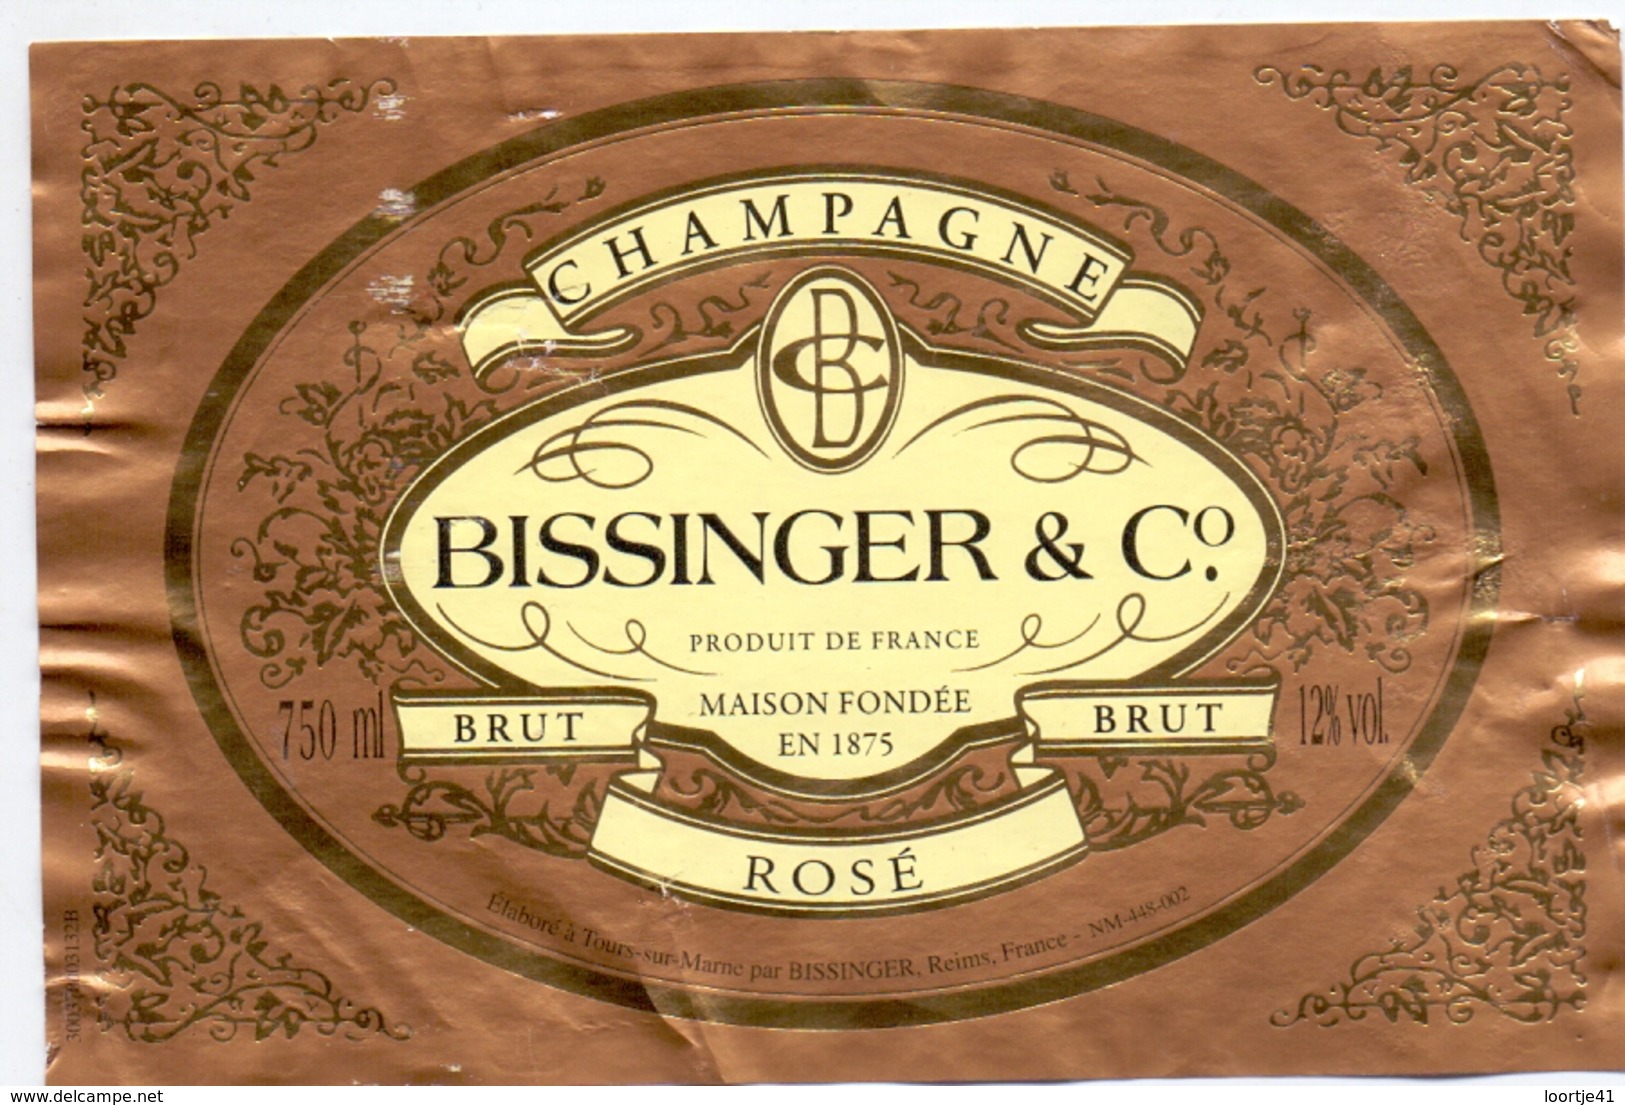 Champagne - etiket etiquette - vin - wijn - Champagne - Bissinger - Rosé